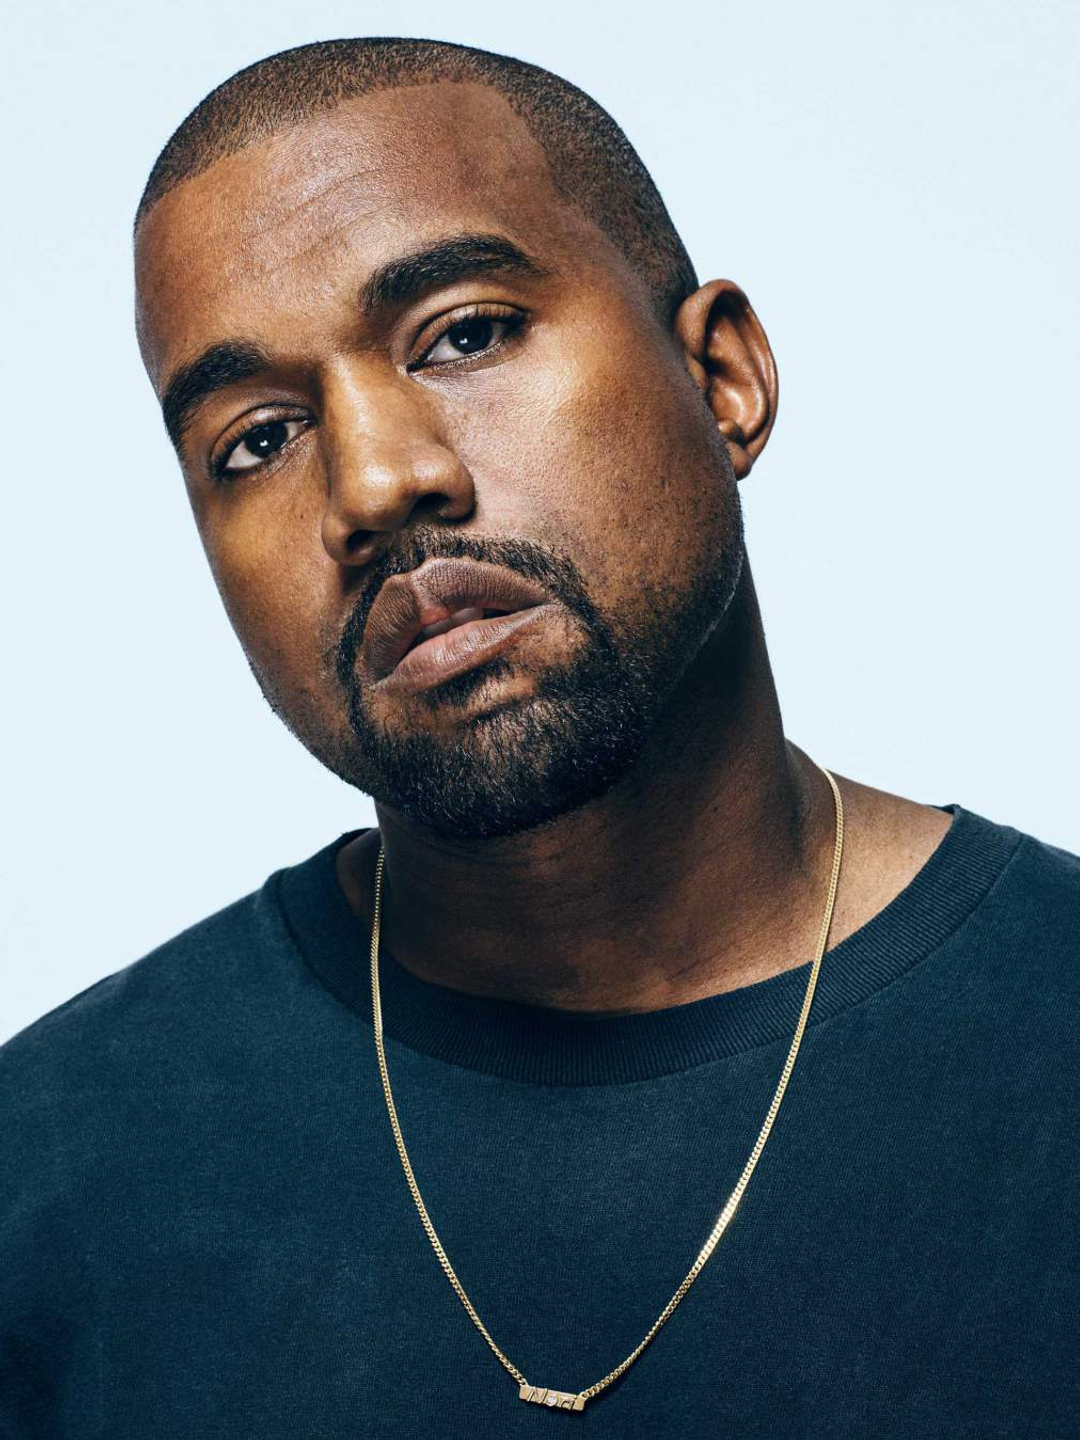 Kanye West story of success